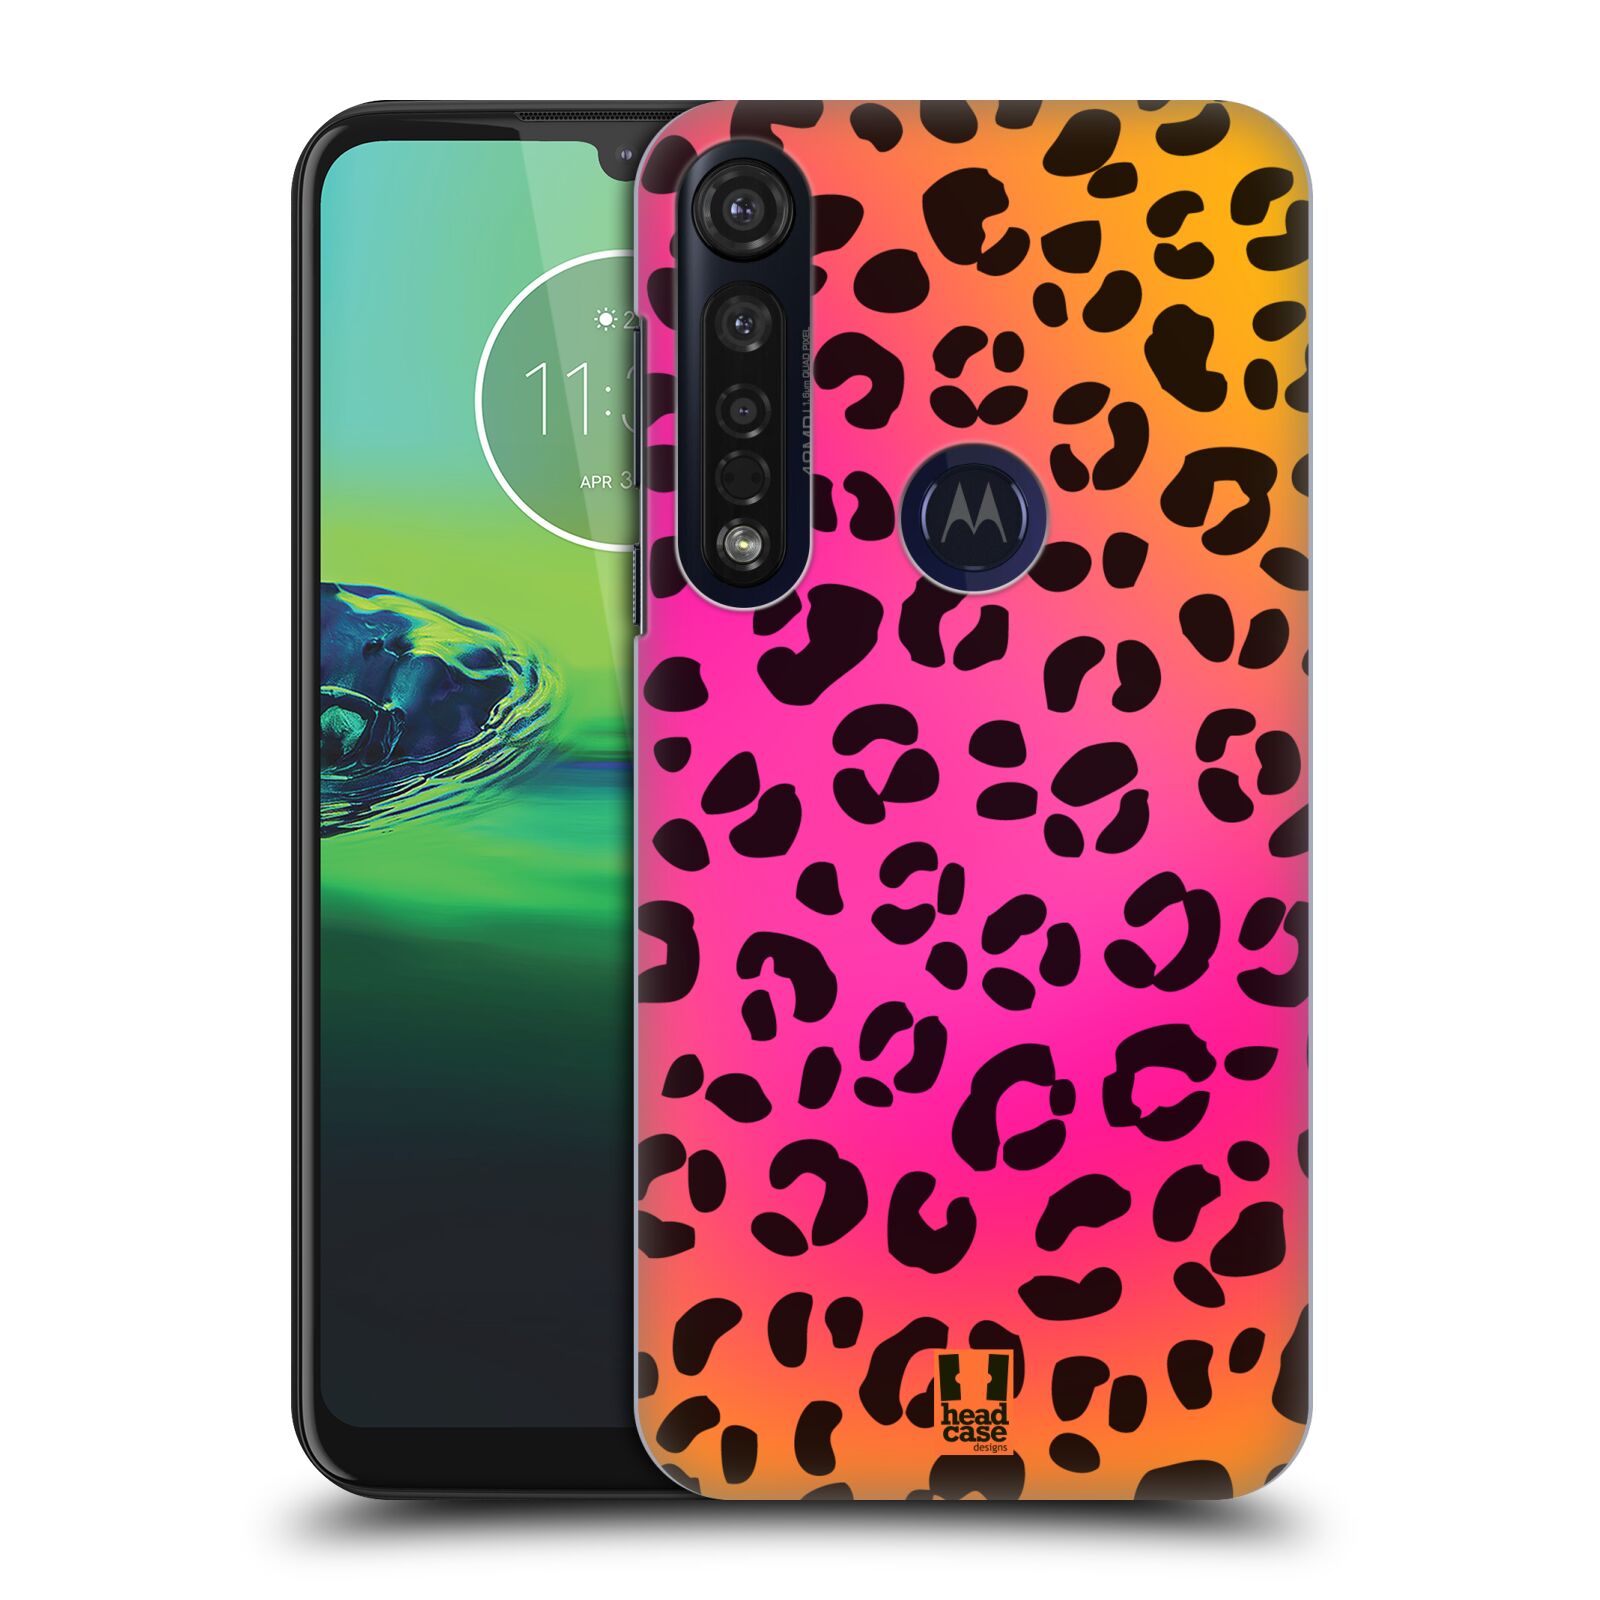 Pouzdro na mobil Motorola Moto G8 PLUS - HEAD CASE - vzor Divočina zvíře růžový leopard